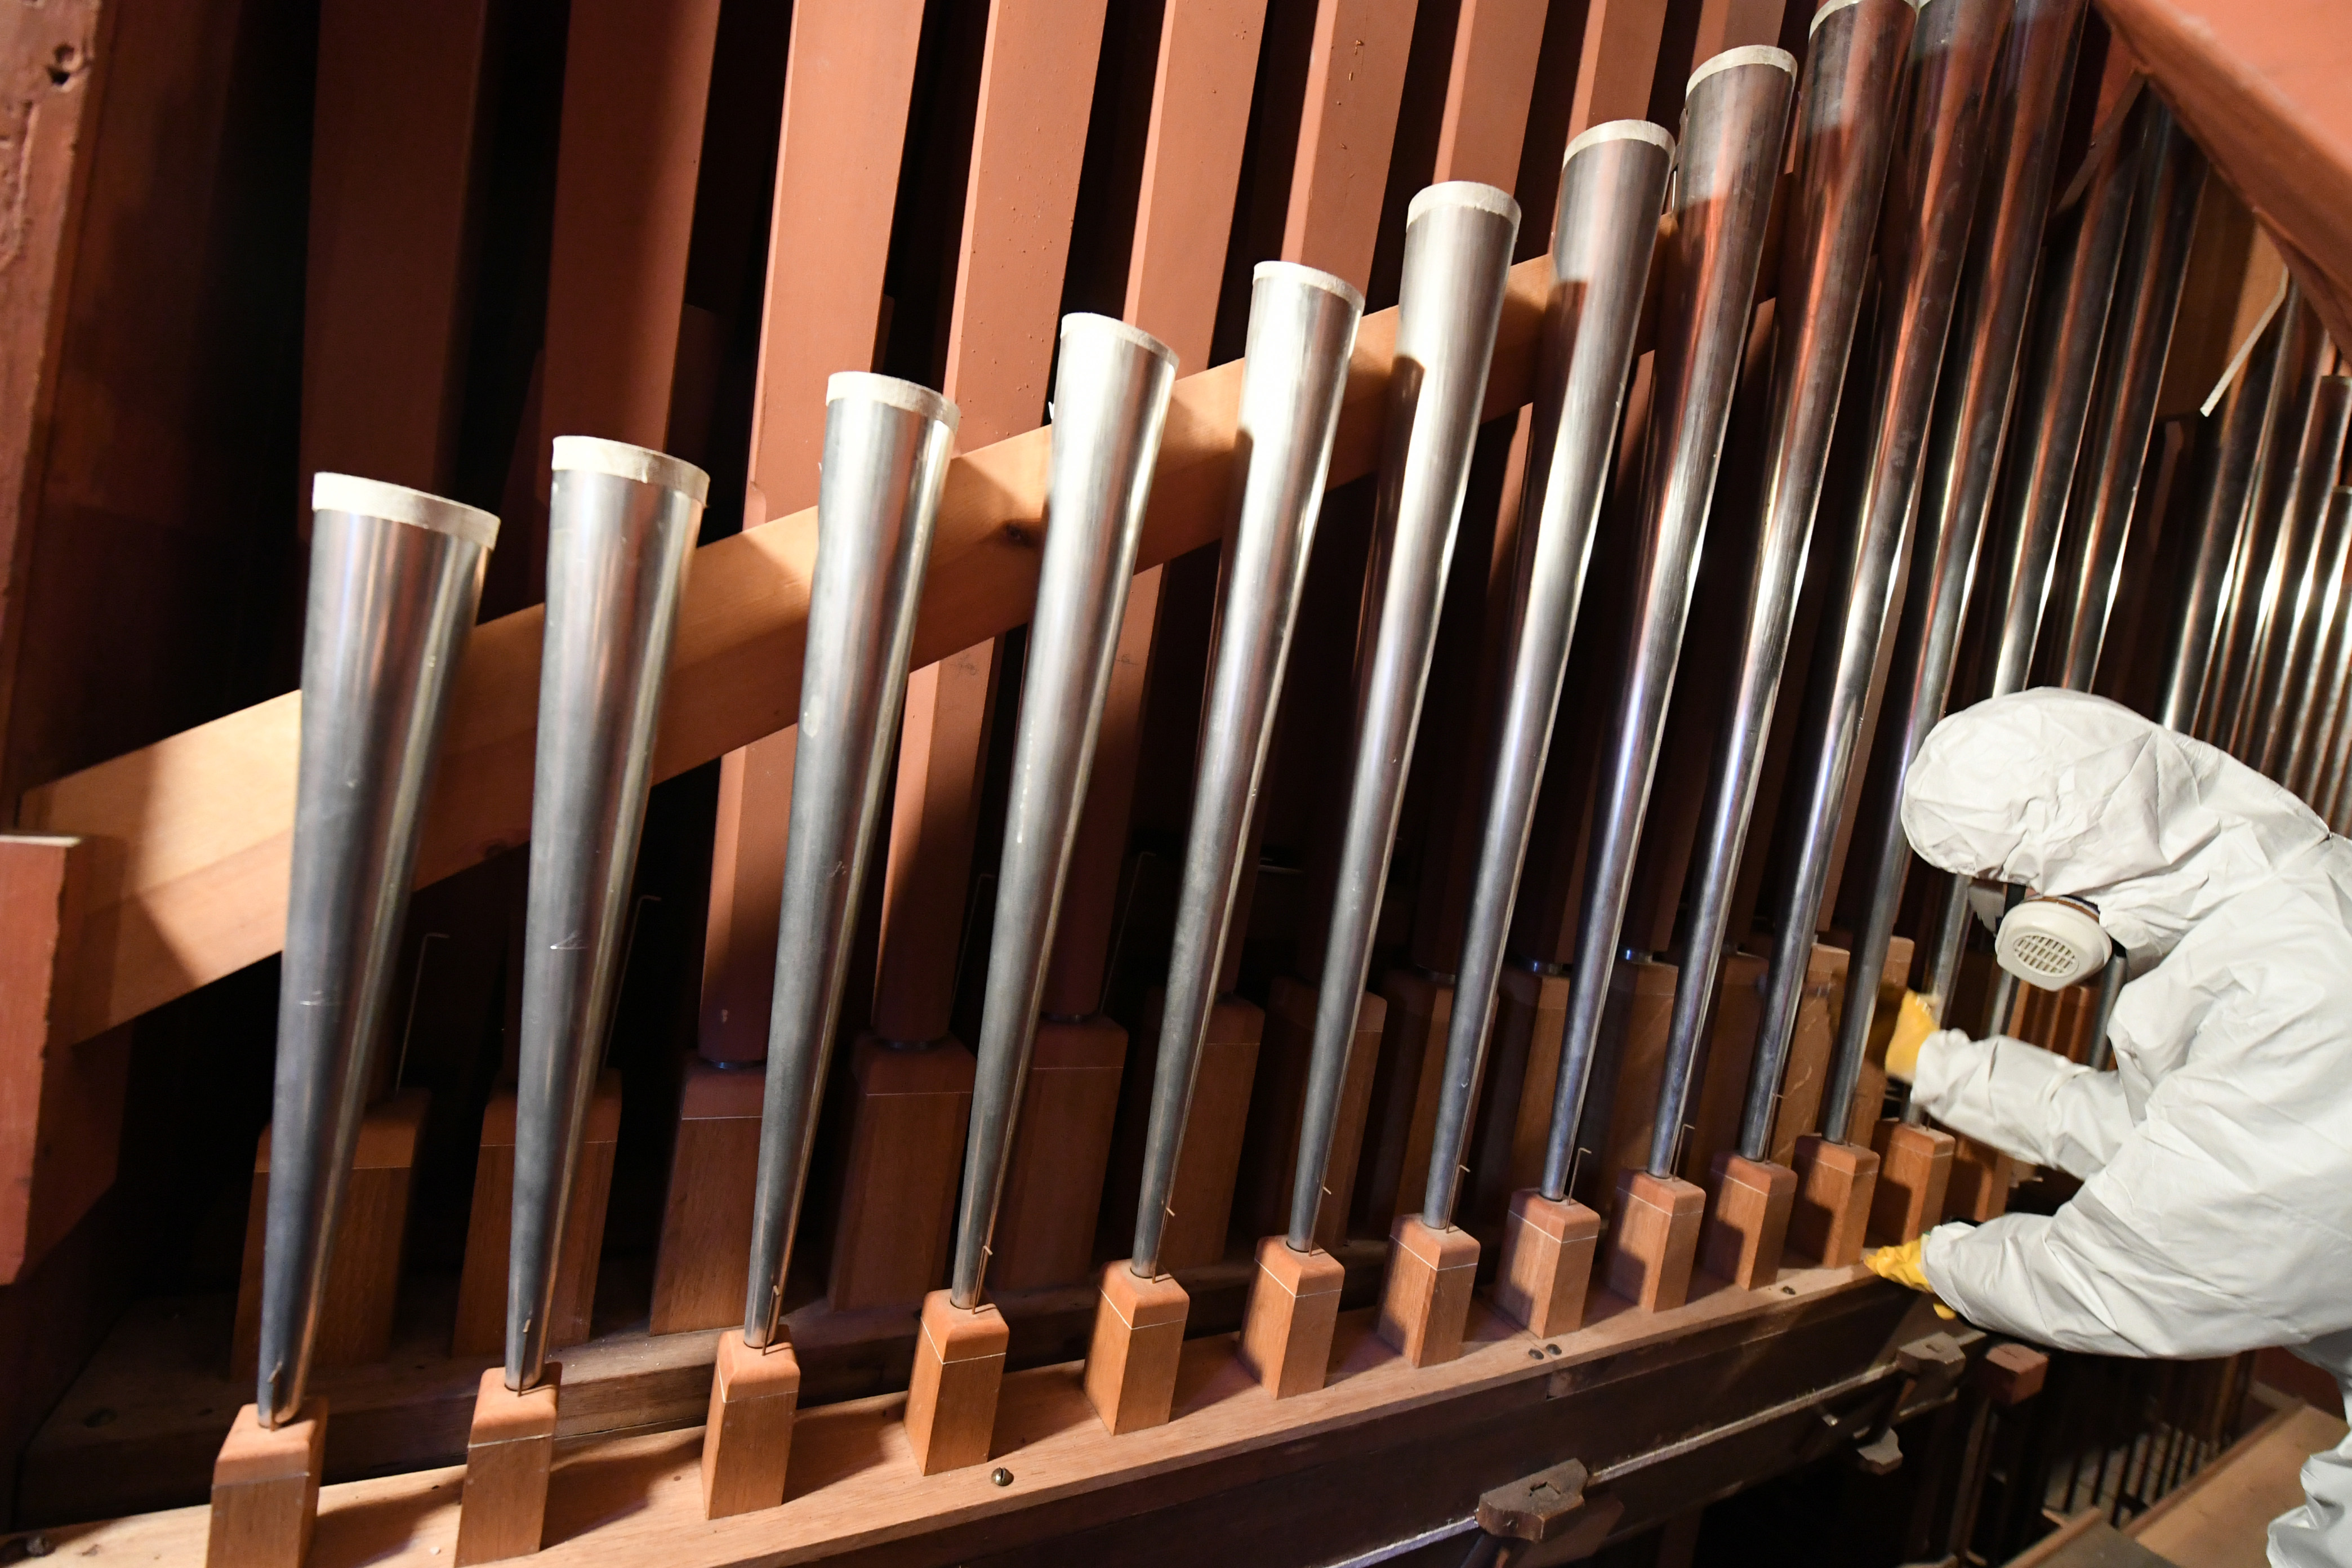 An expert in wood restoration is working on the historic Buchholz-Grüneberg organ in the Demmin church of St. Bartholomaei.